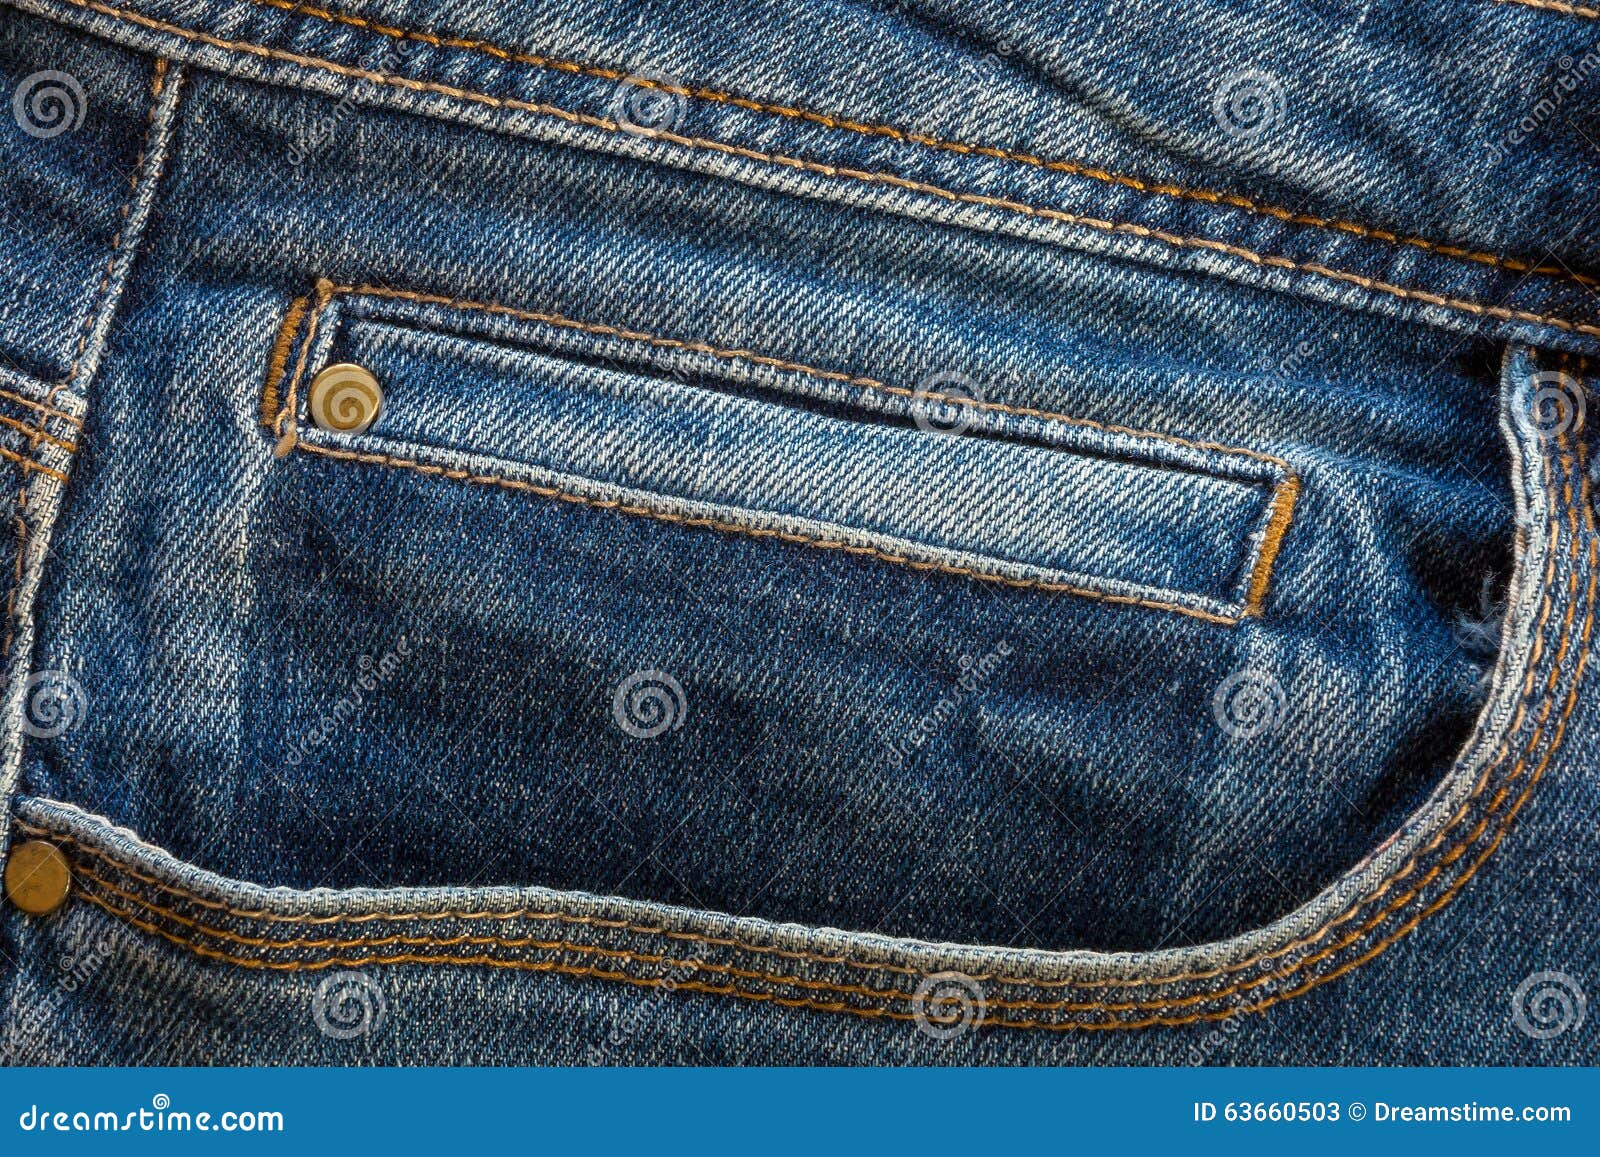 Blue jeans texture stock image. Image of seam, closeup - 63660503